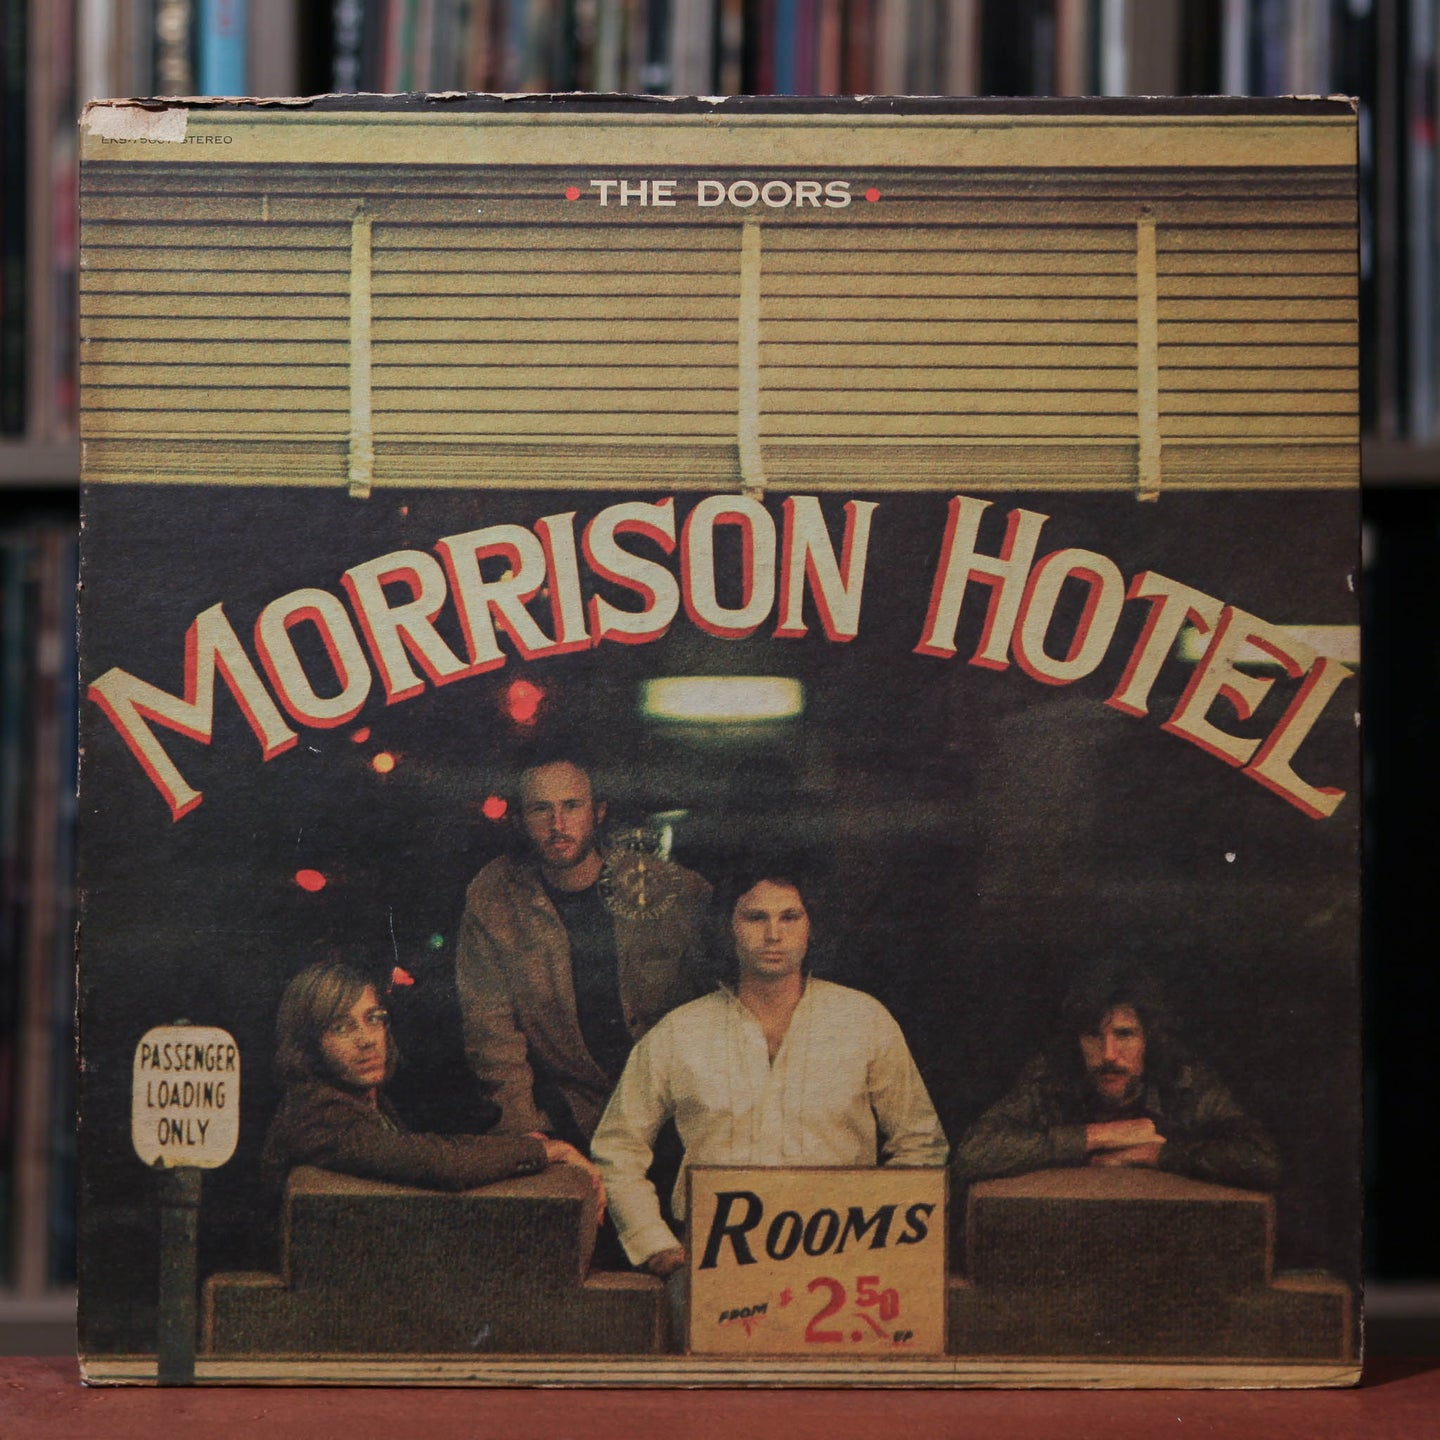 The Doors - Morrison Hotel - 1970 Elektra - VG/VG